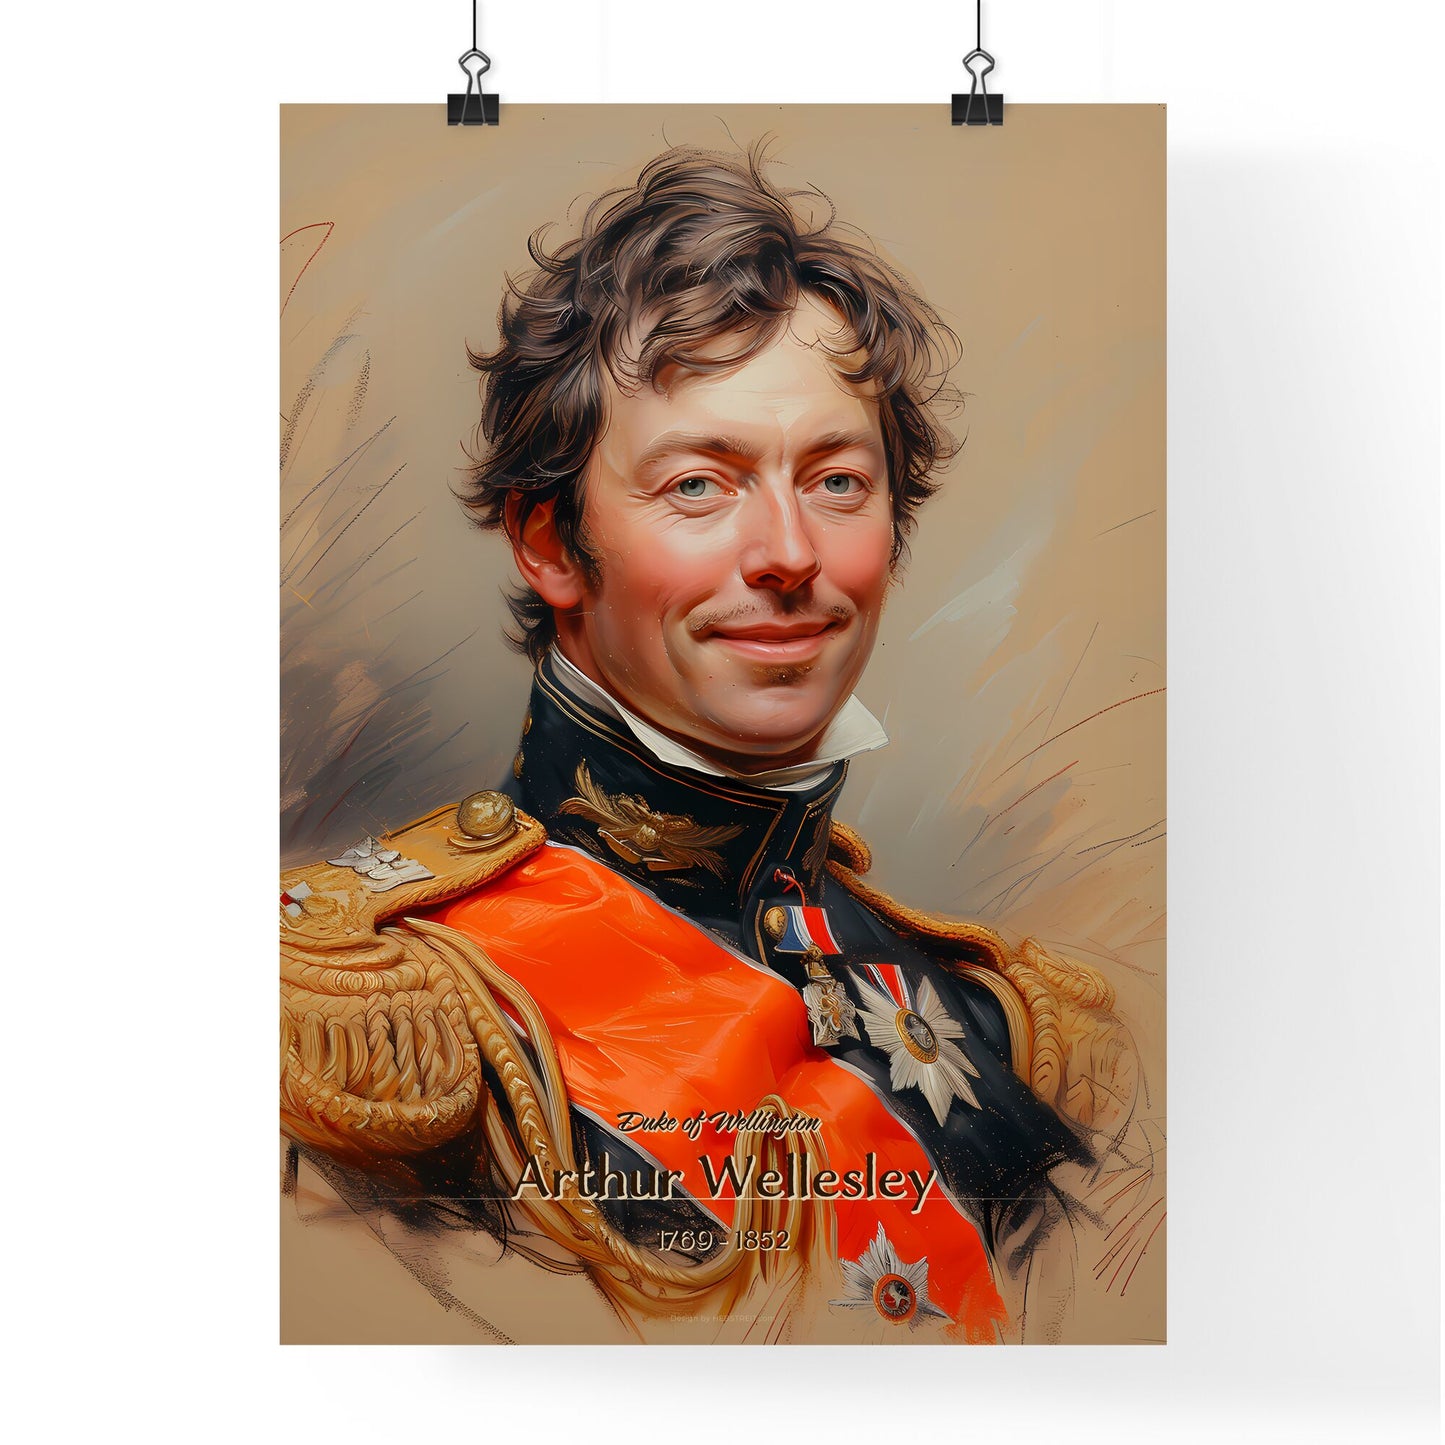 Duke of Wellington, Arthur Wellesley, 1769 - 1852, A Poster of a man in a military uniform Default Title